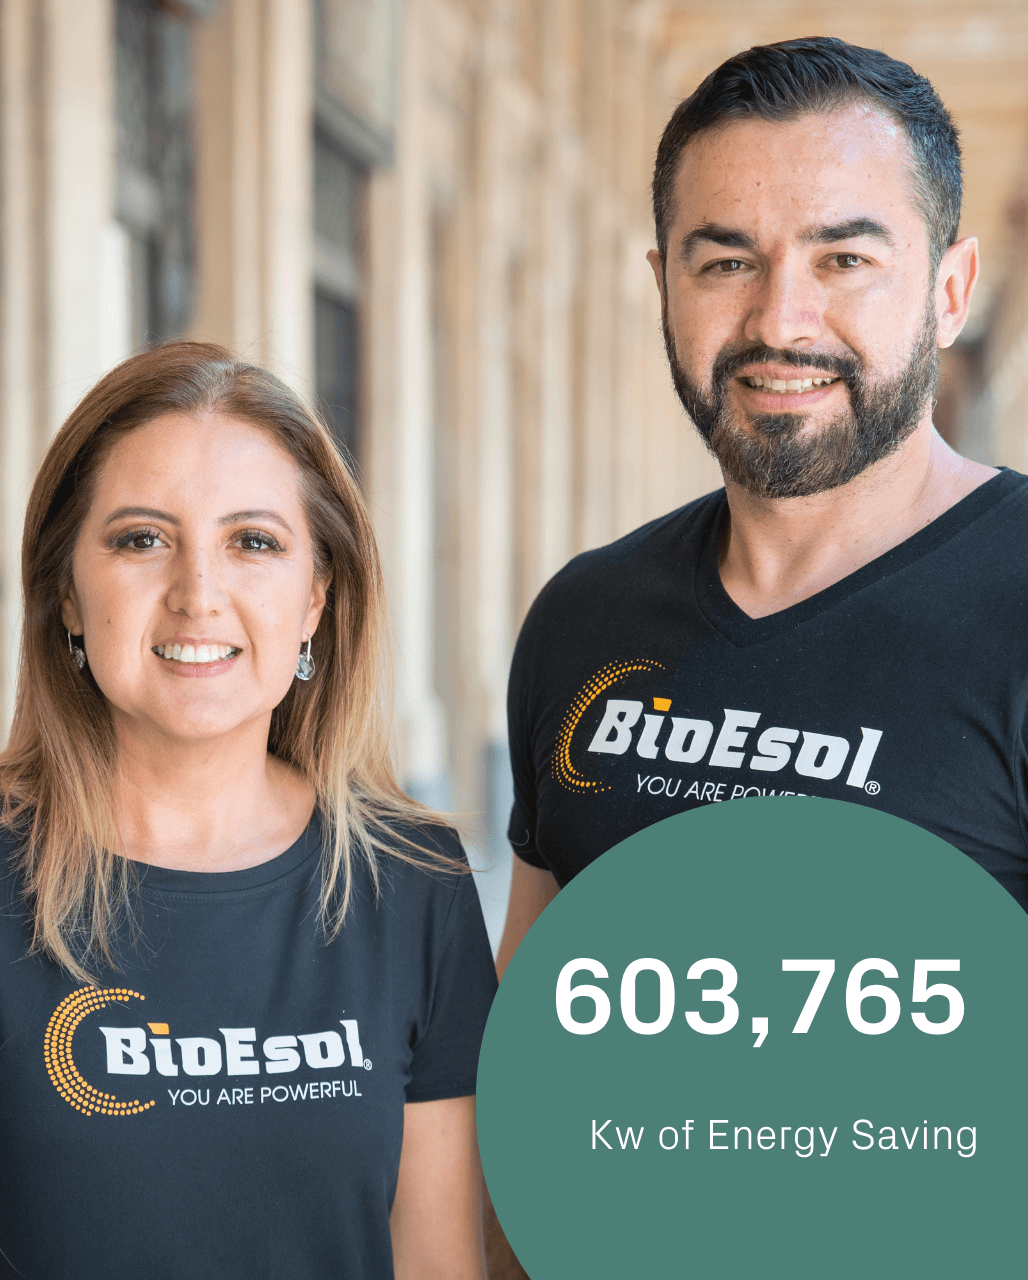 BioEsol impact